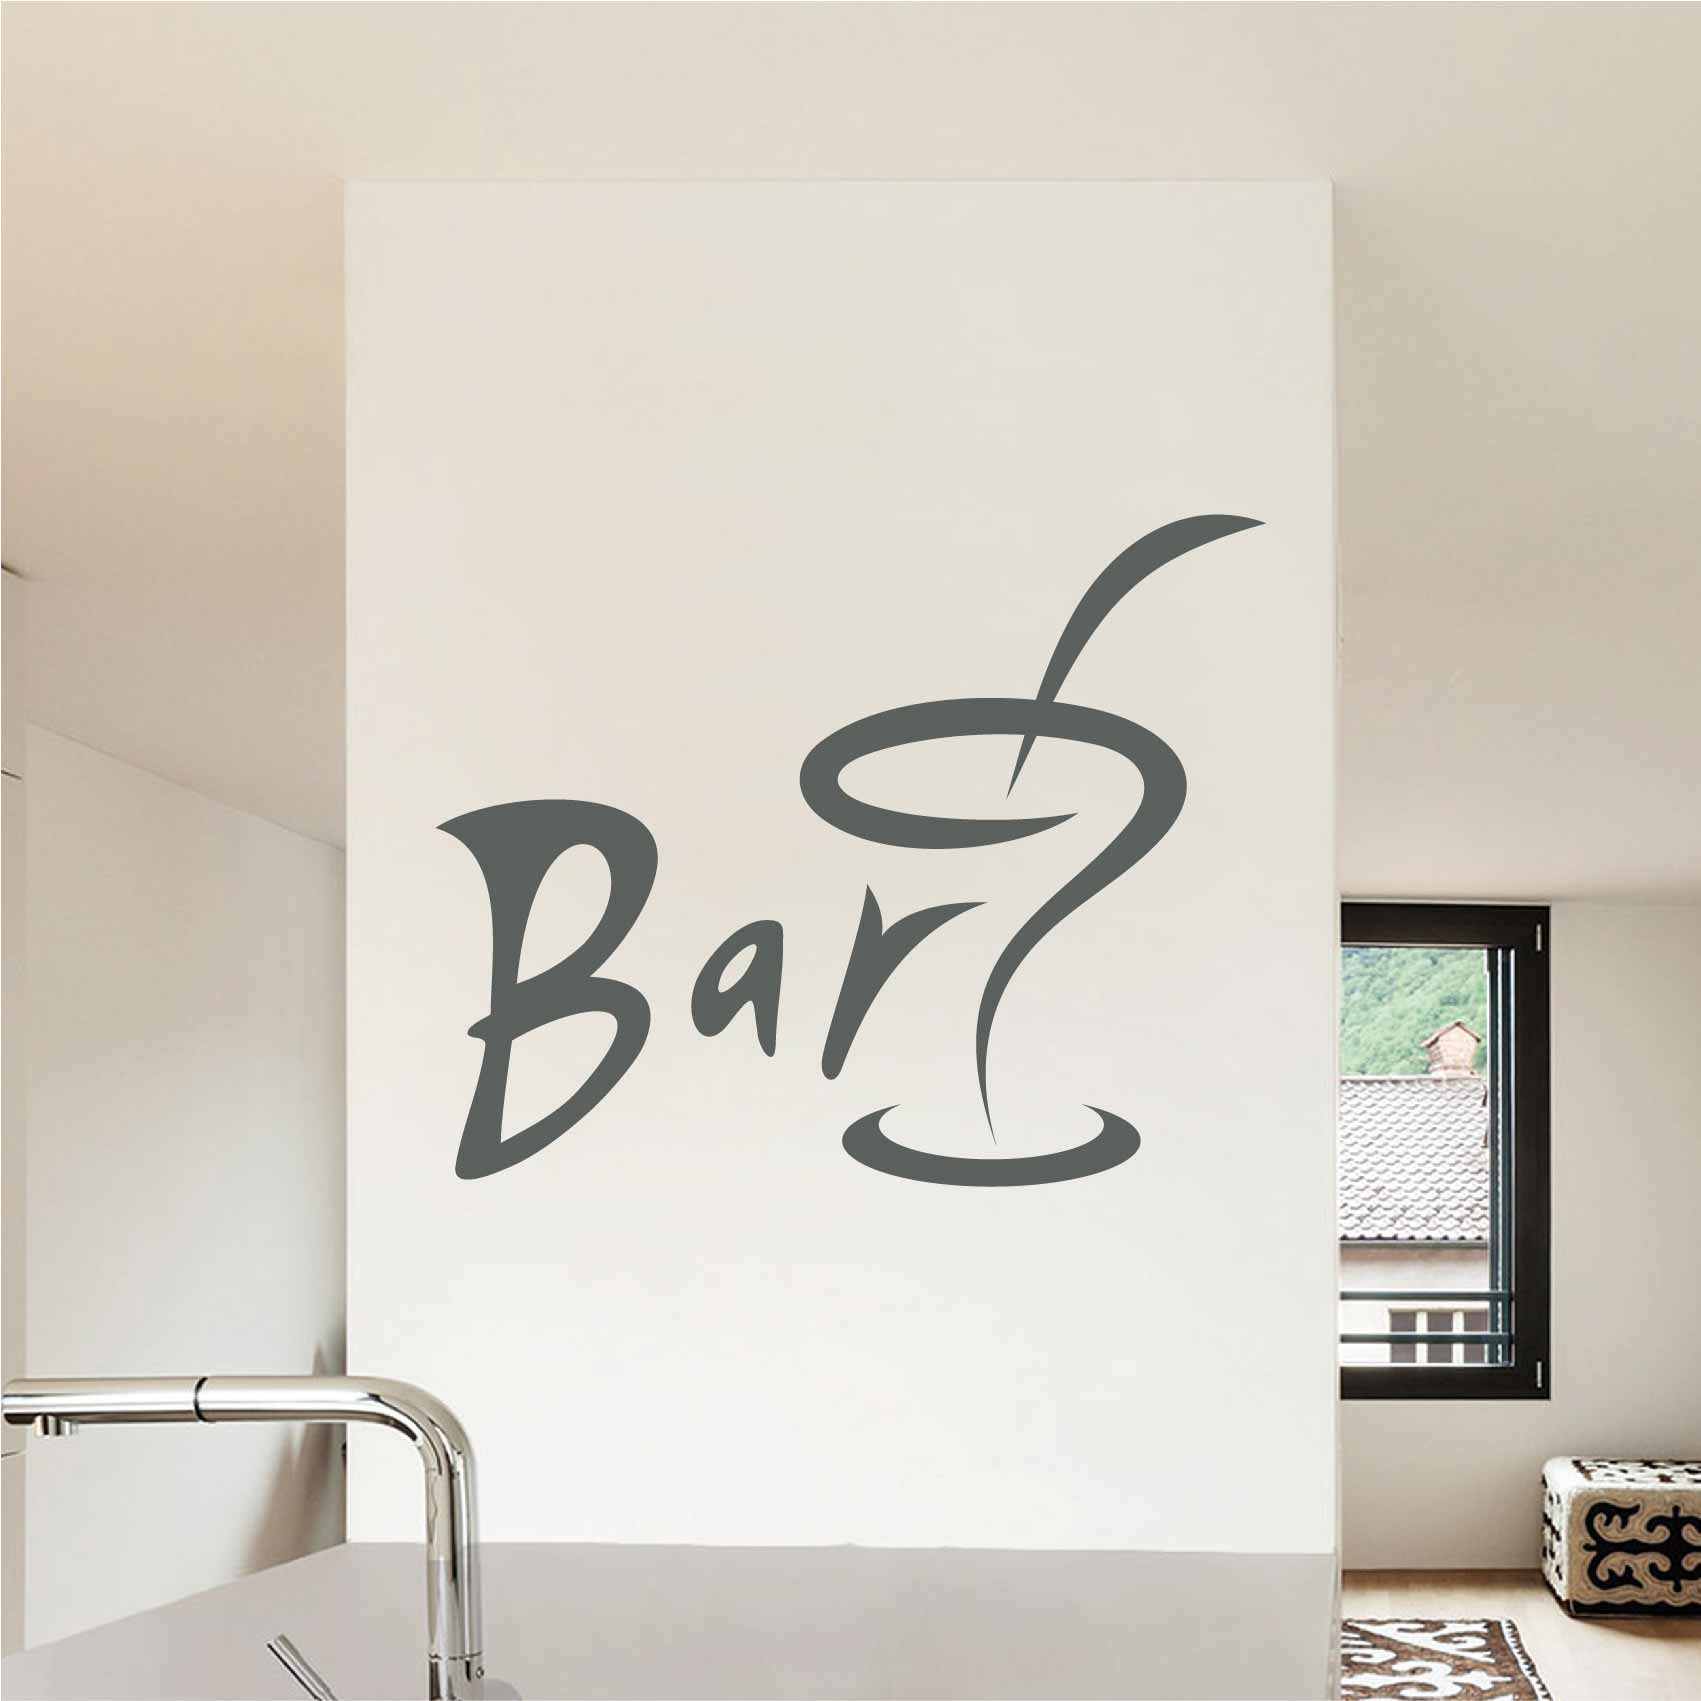 stickers-cuisine-bar-ref23cuisine-autocollant-muraux-cuisine-kitchen-sticker-mural-deco-decoration